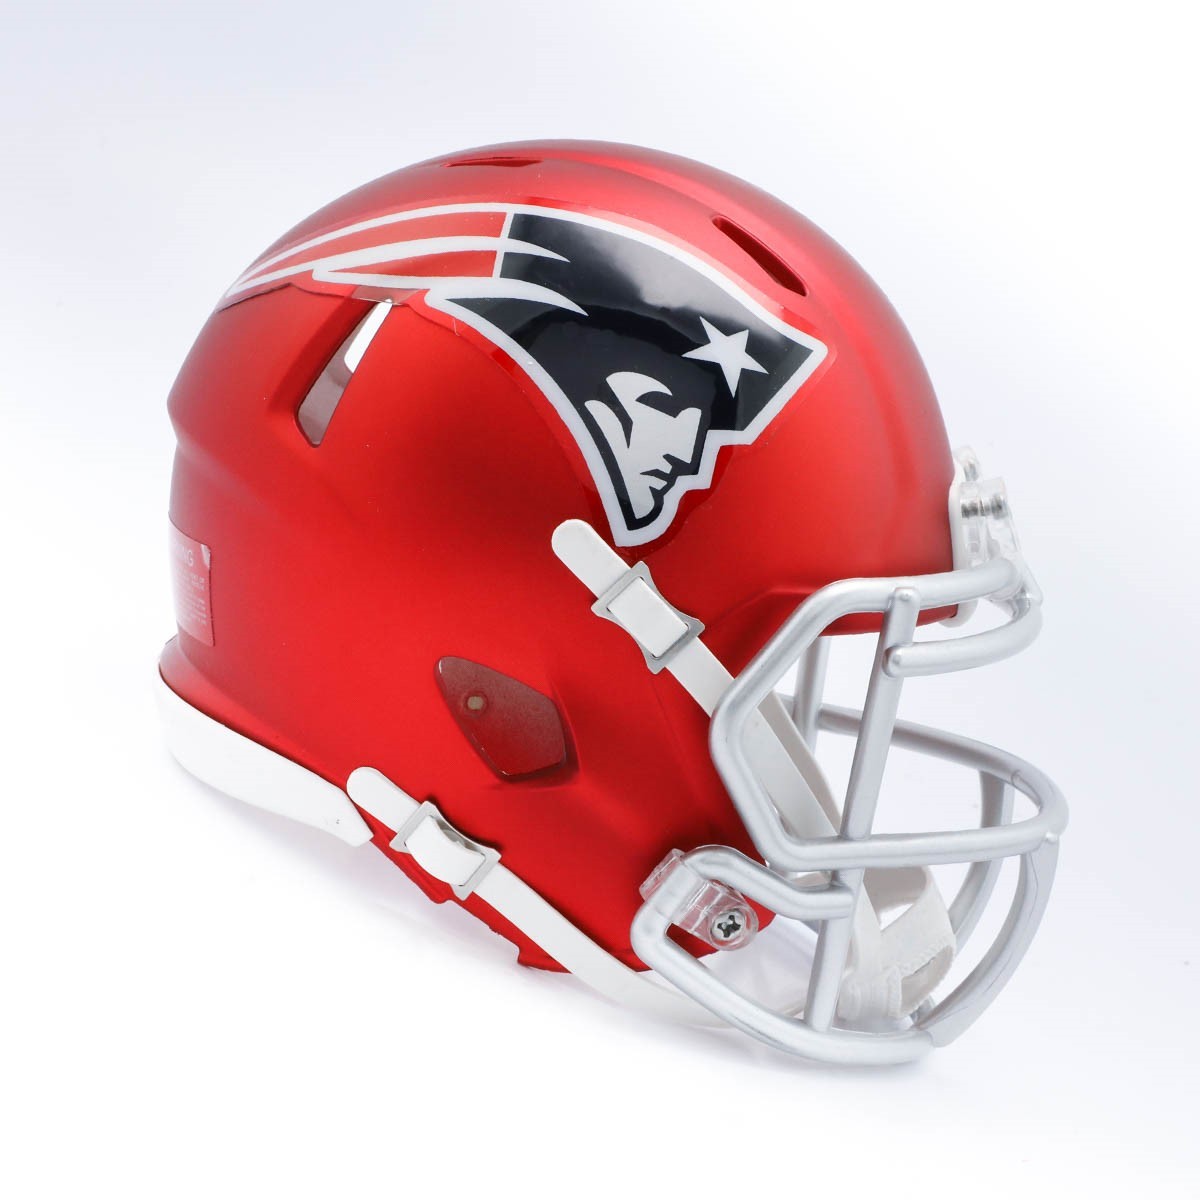 New England Patriots Officially Licensed Speed Full Size Replica Football Helmet 